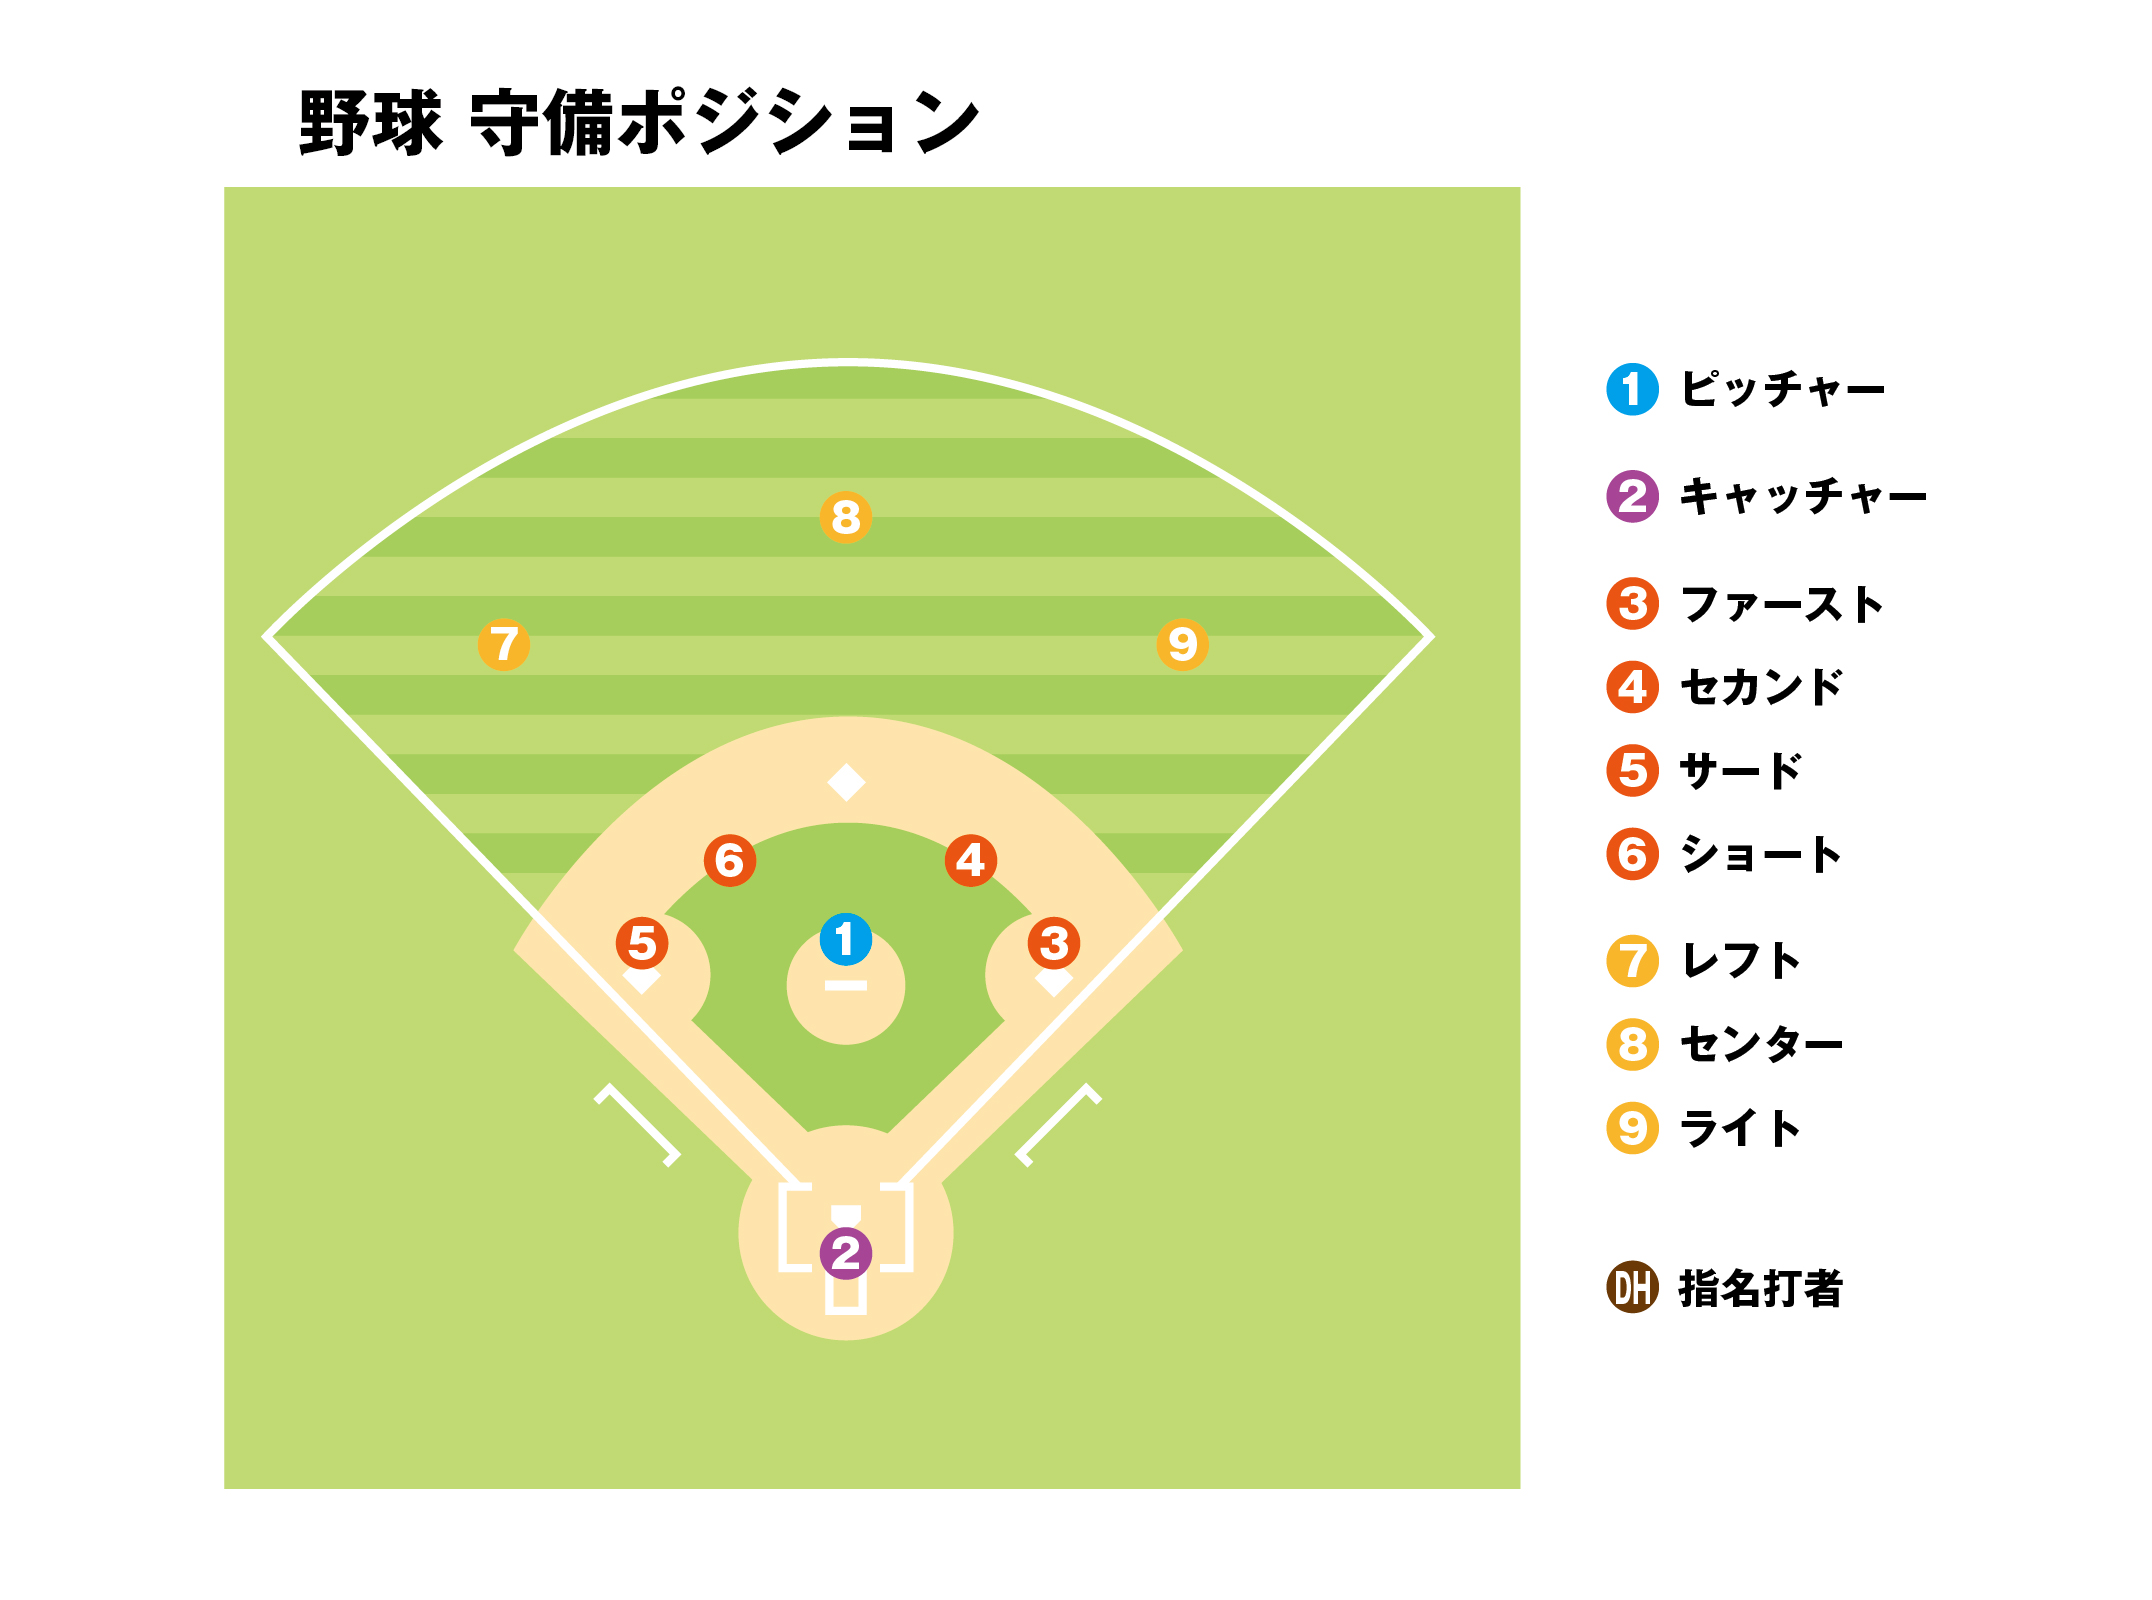 bons_baseball position